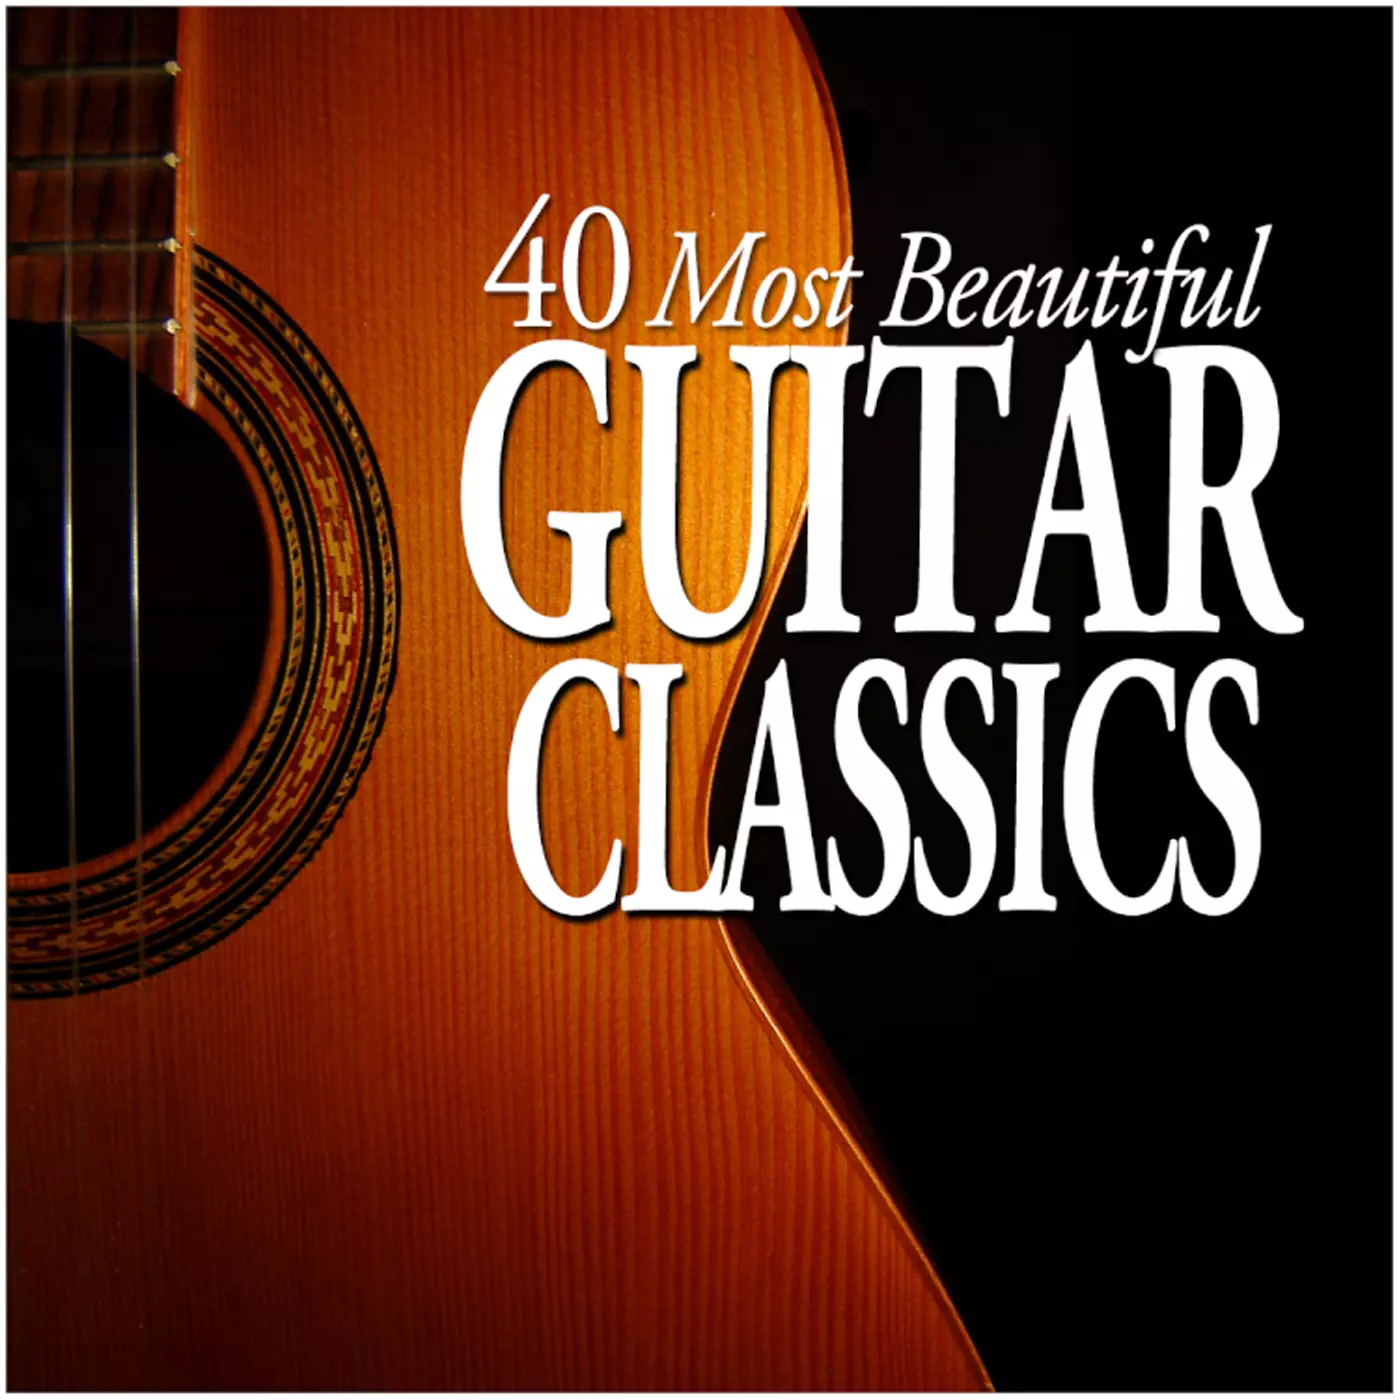 40 Most Beautiful Guitar Classics